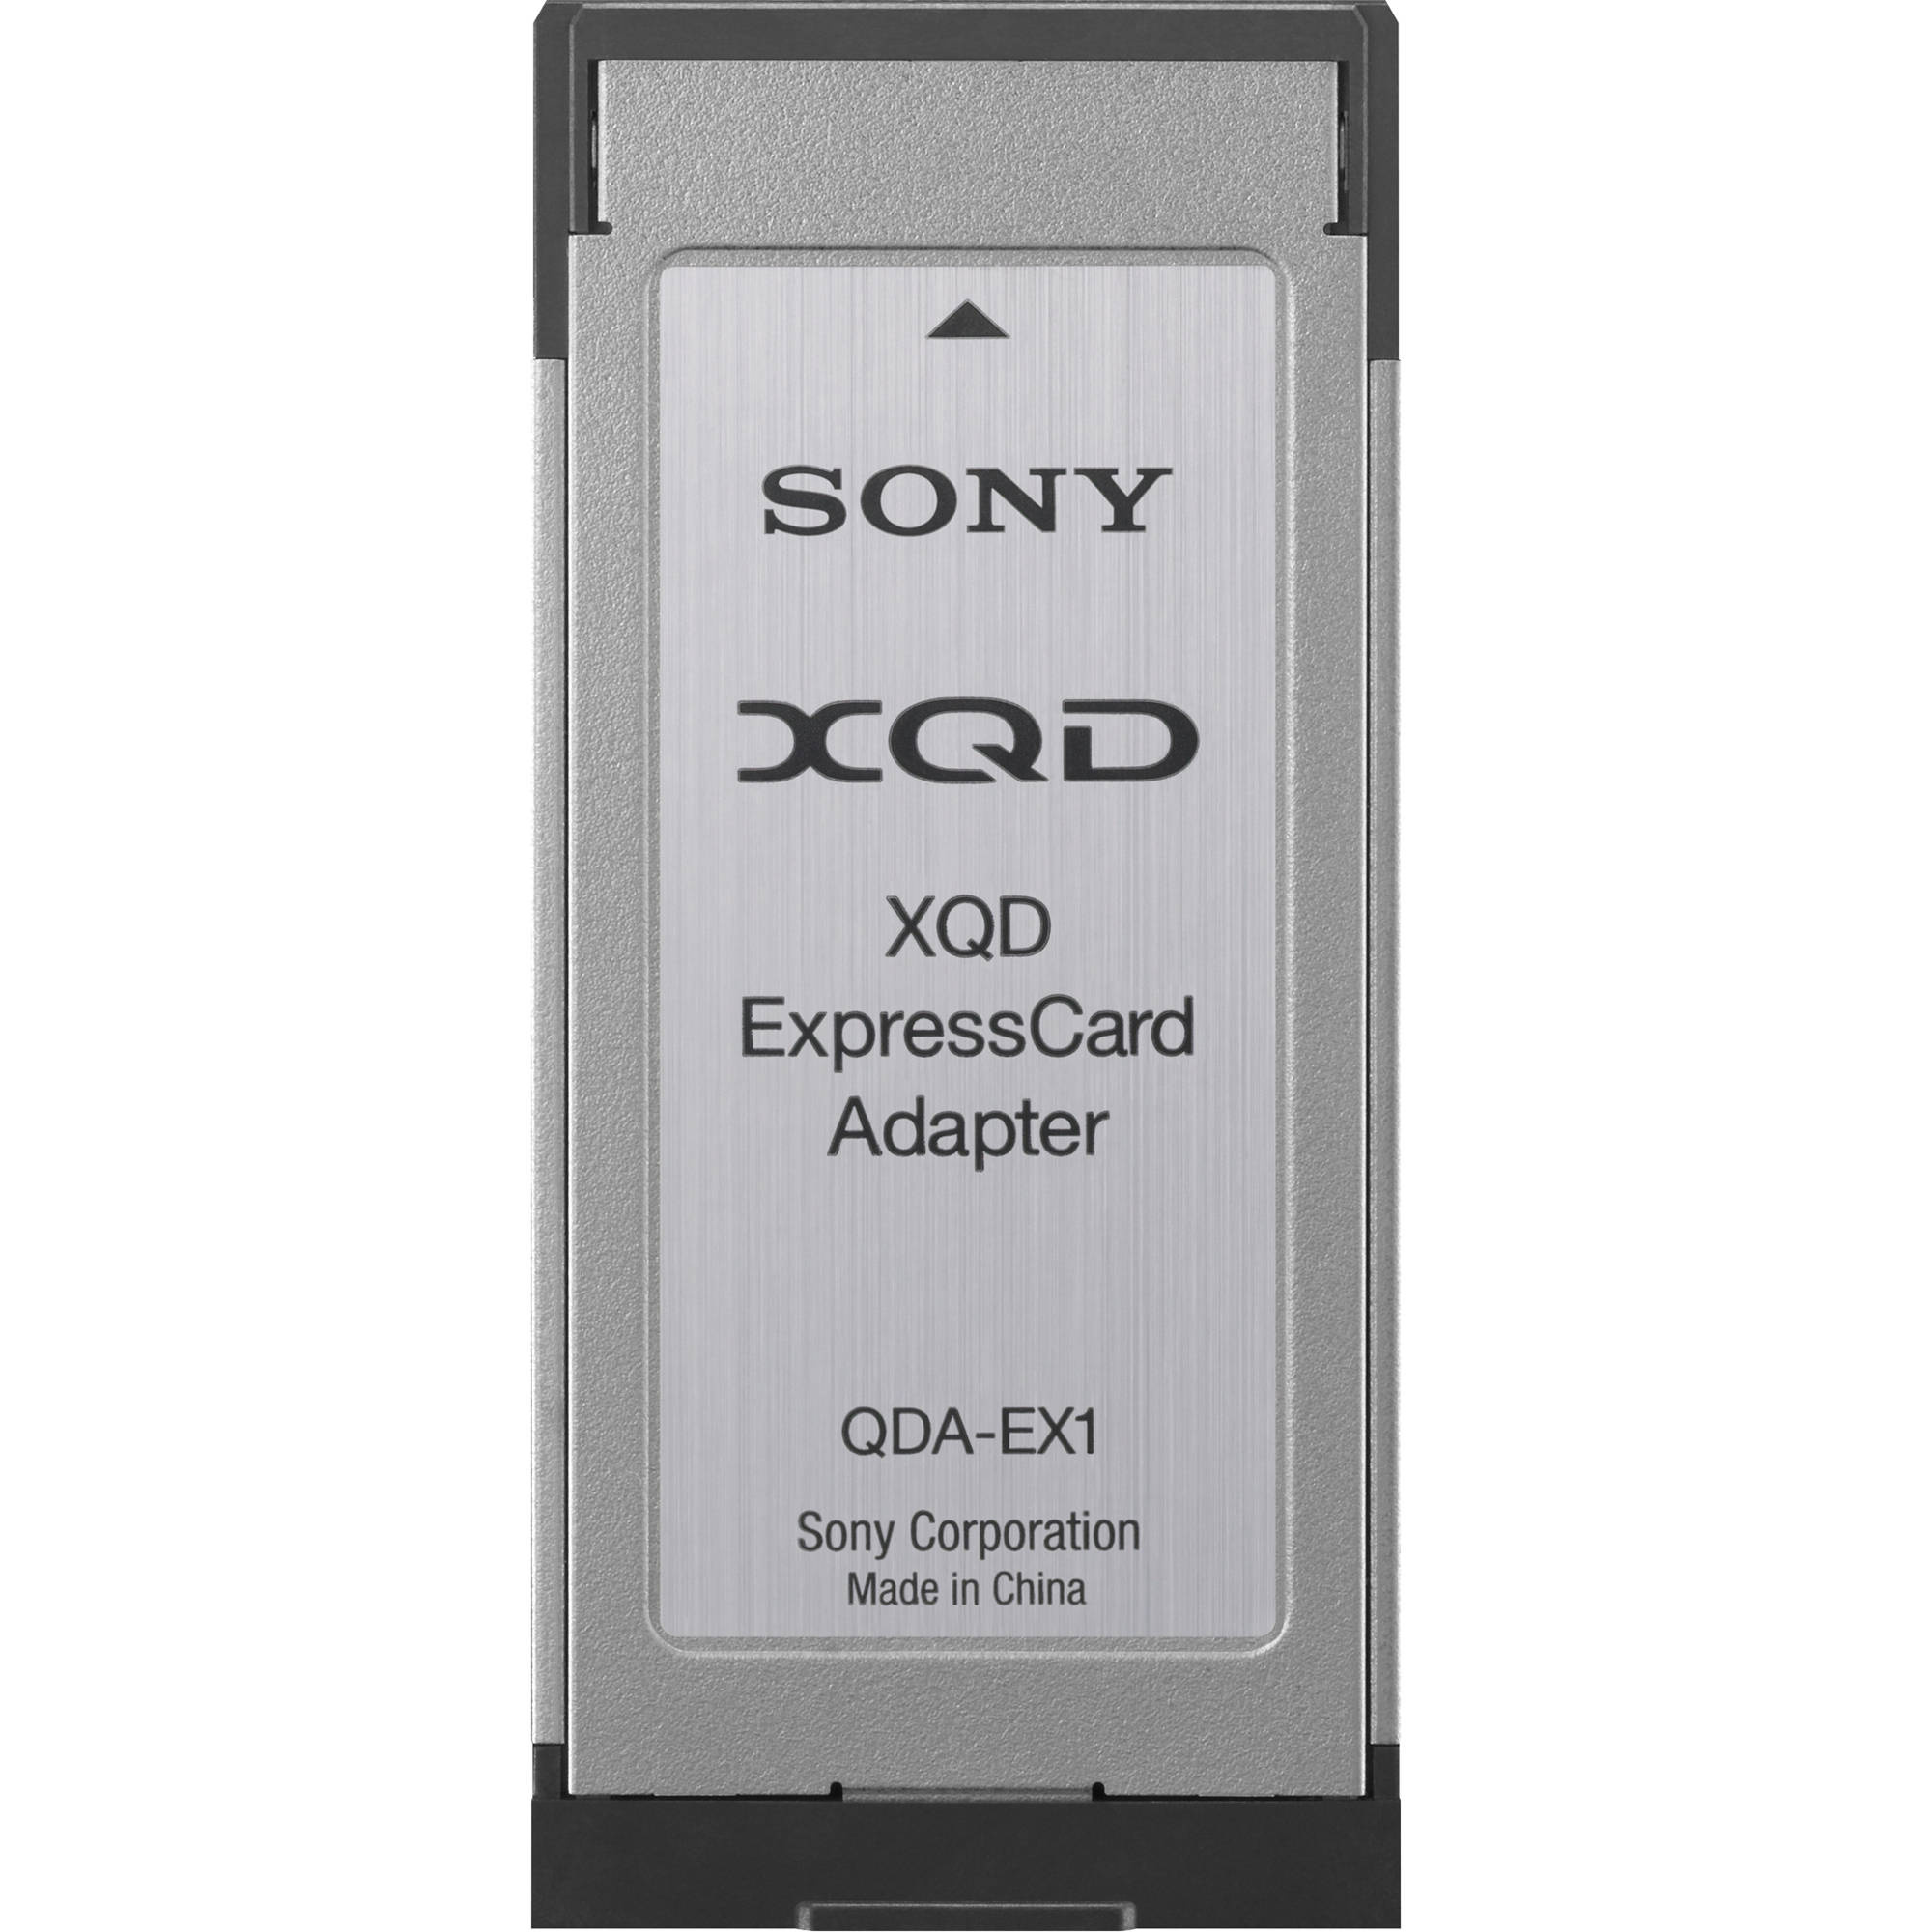 Sony QDAEX1 XQD ExpressCard Adapter